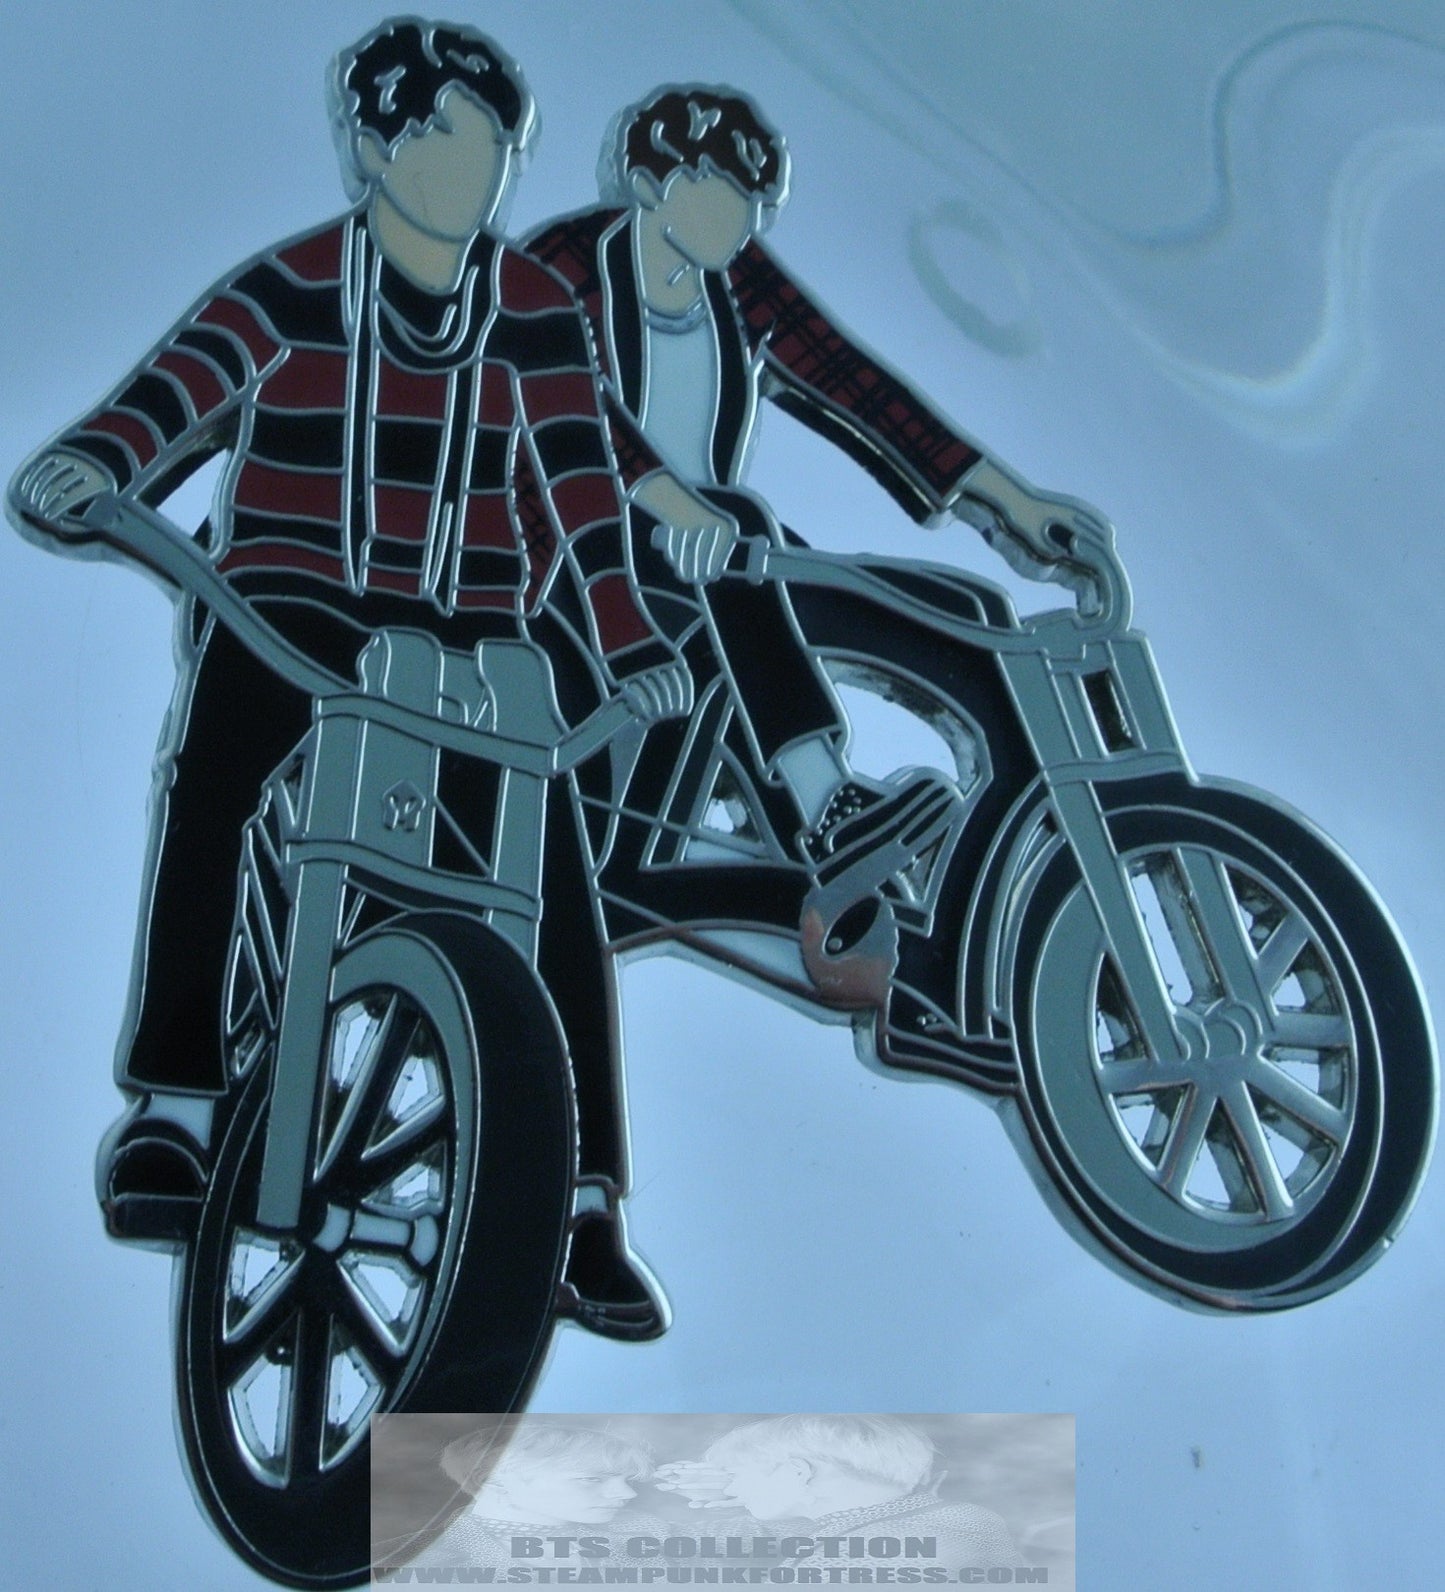 BTS ENAMEL PIN JEON JUNGKOOK KIM SEOKJIN JIN WAR OF HORMONE BIKES BICYCLES WOH SILVER SUB-UNIT BADGE BUTTON DANI PINS